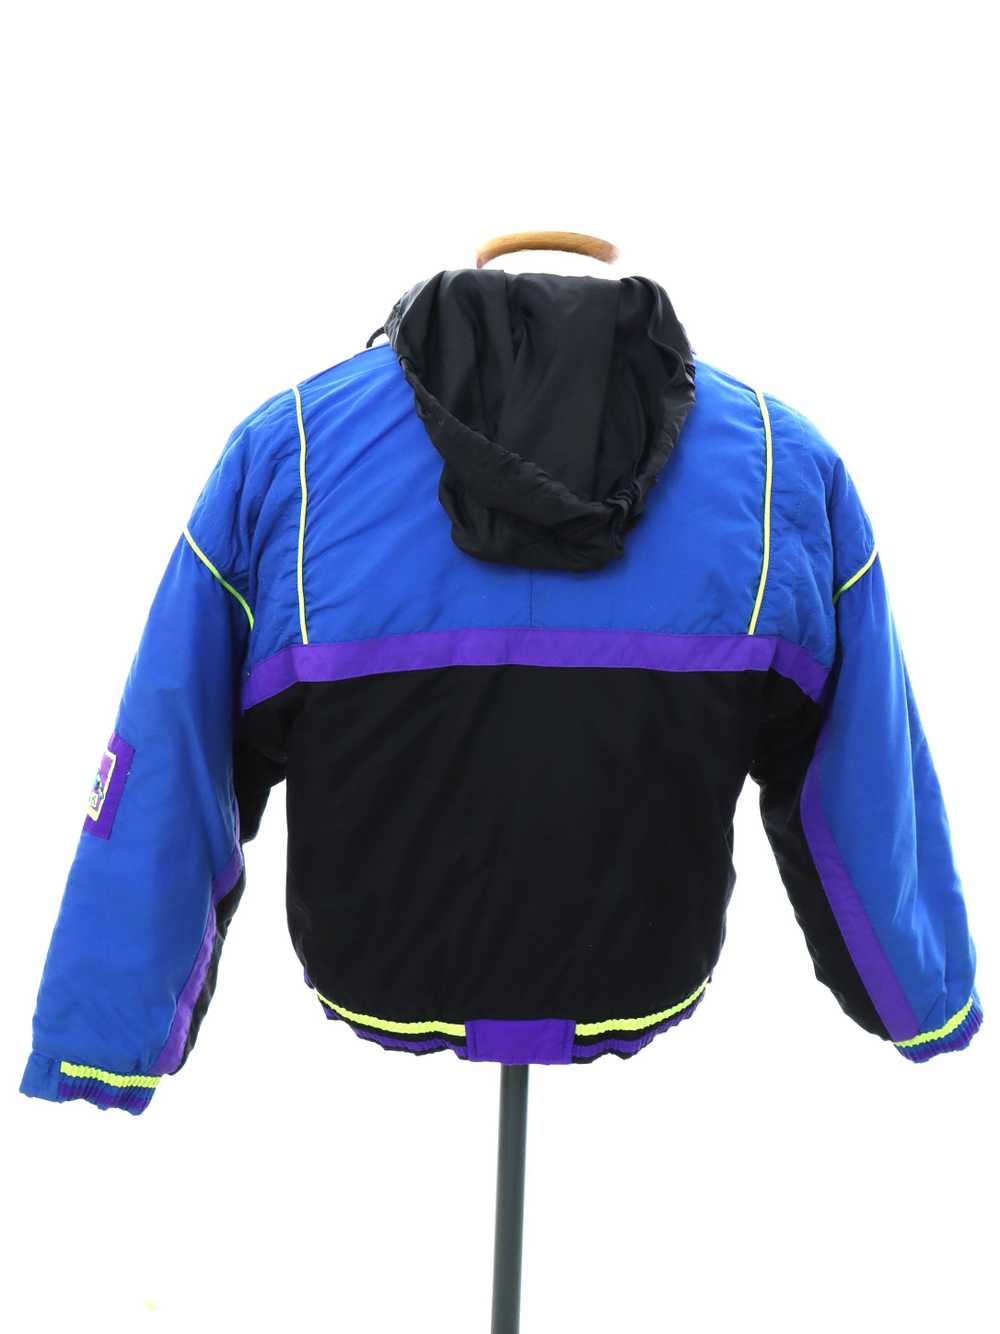 1990's Unisex Ladies or Boys Ski Jacket - image 3